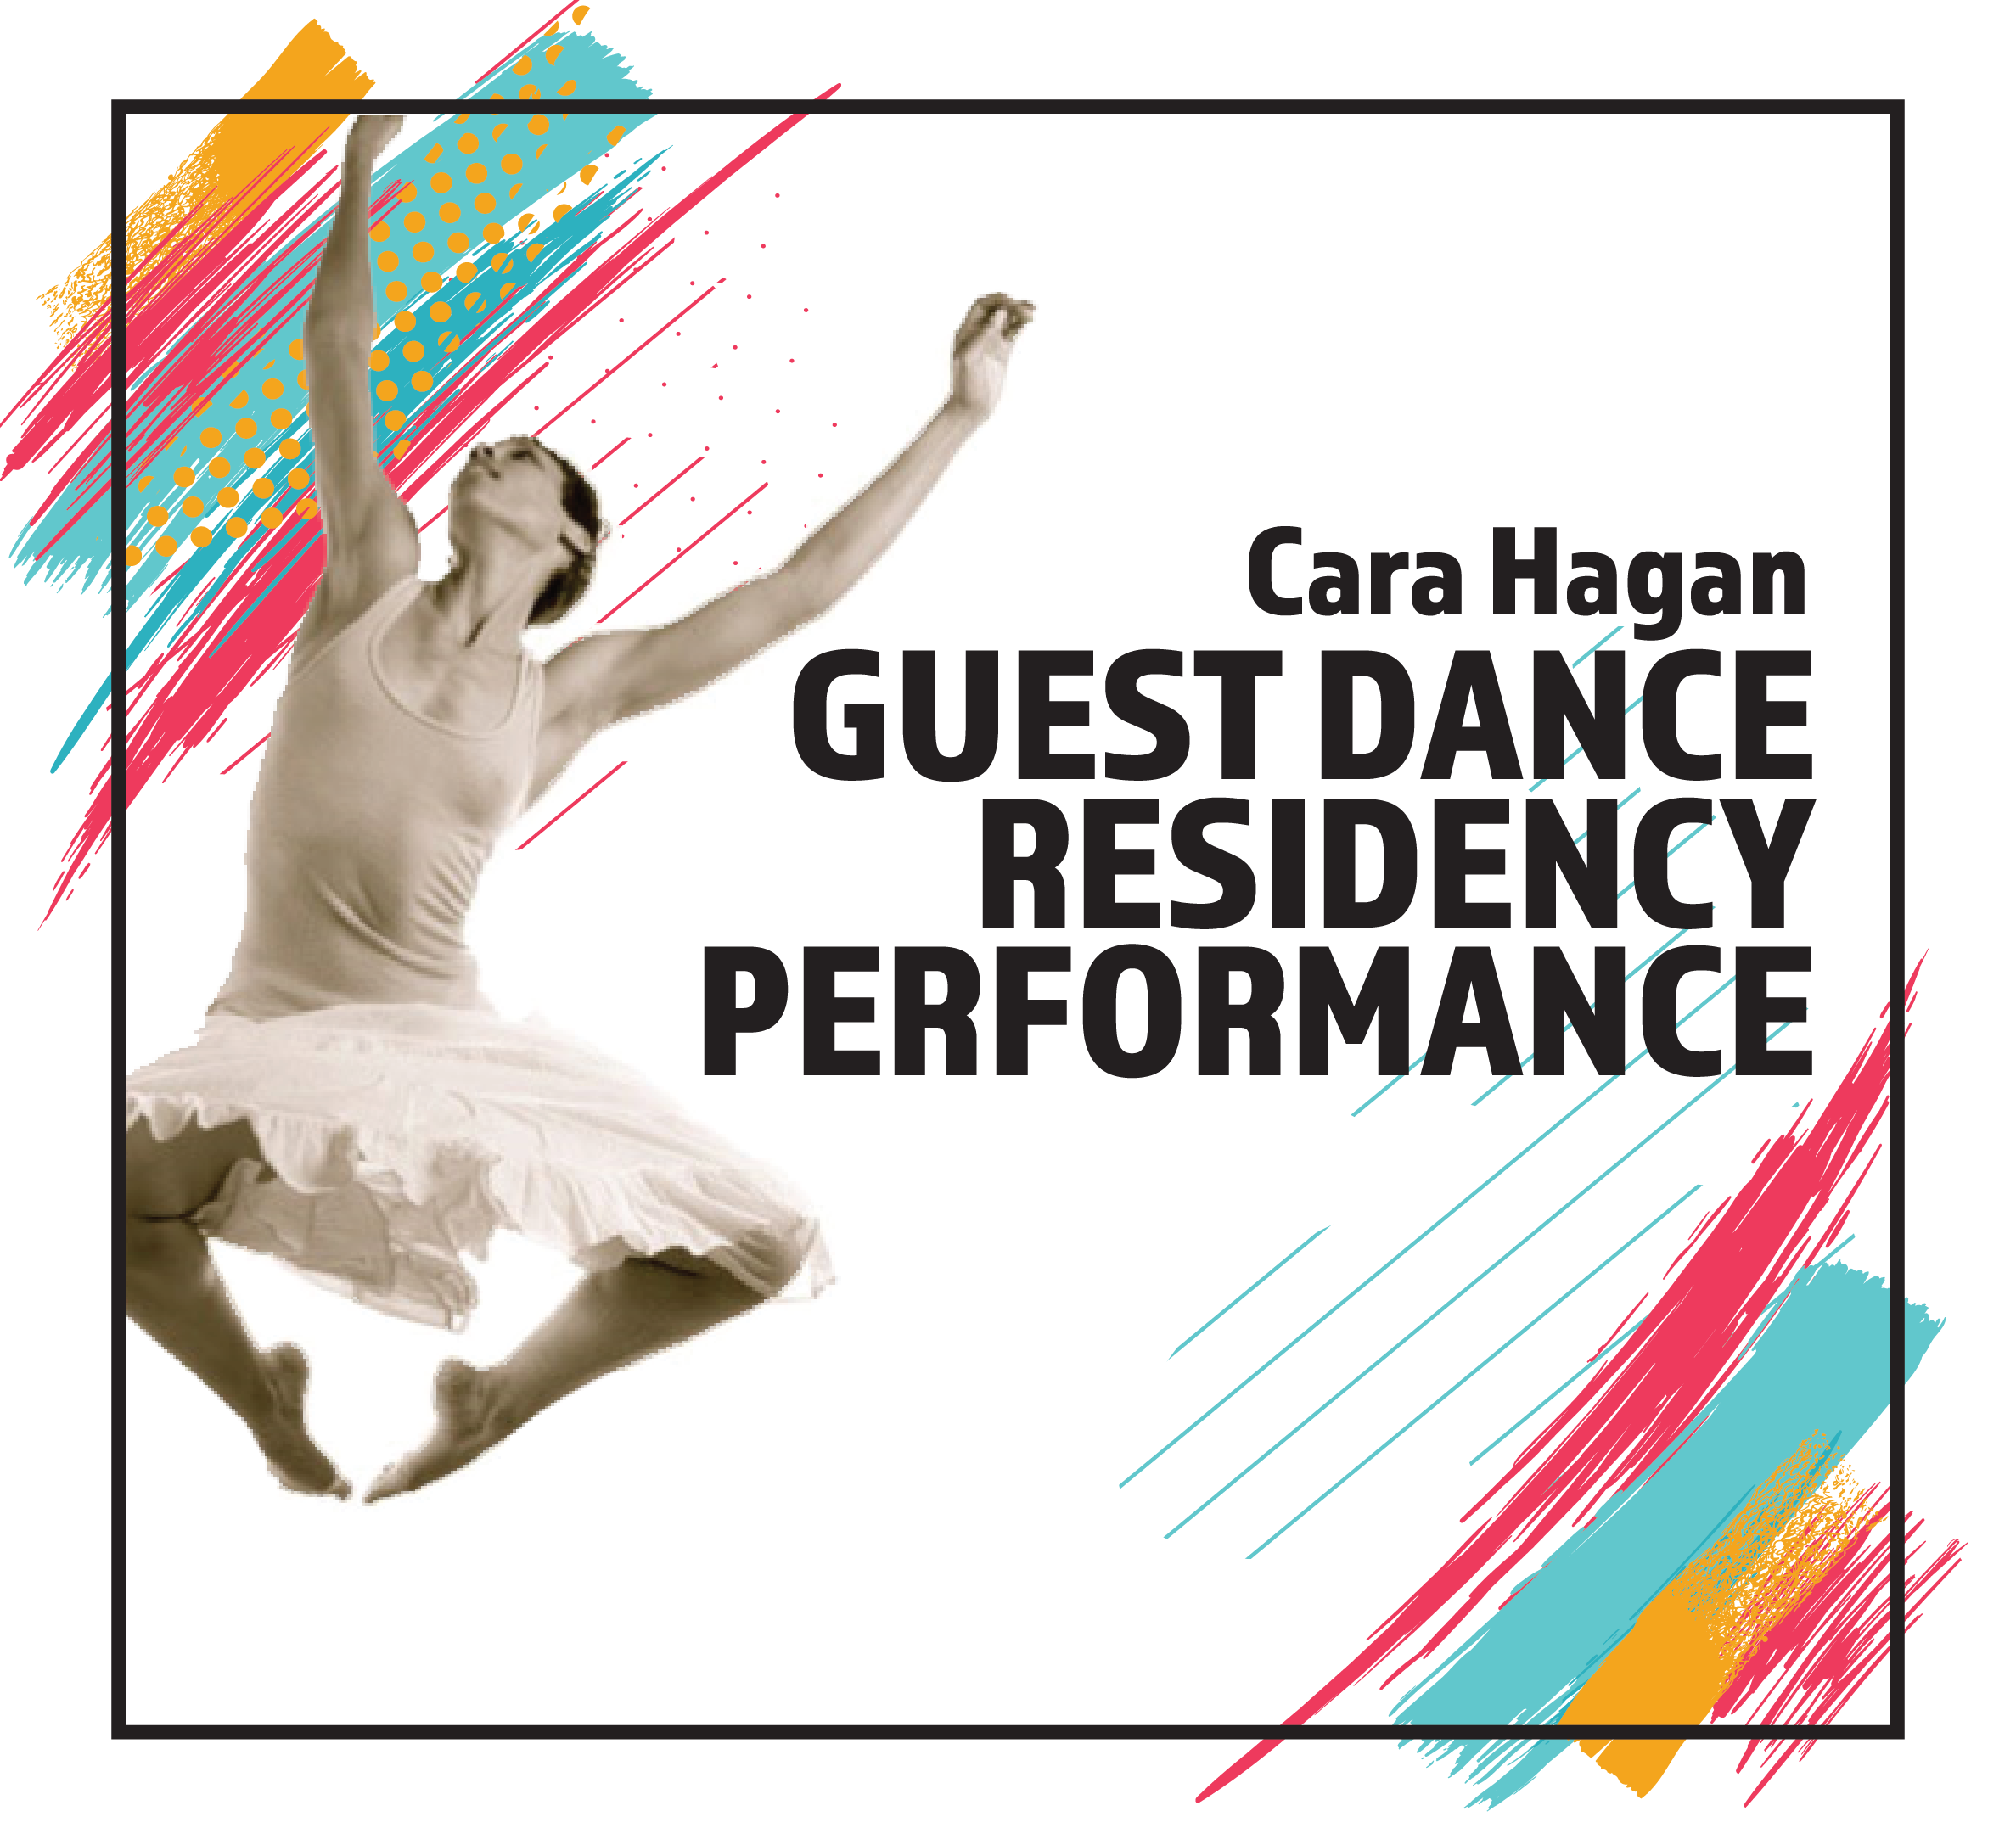 Cara Hagan Guest Dance Residency Performanc